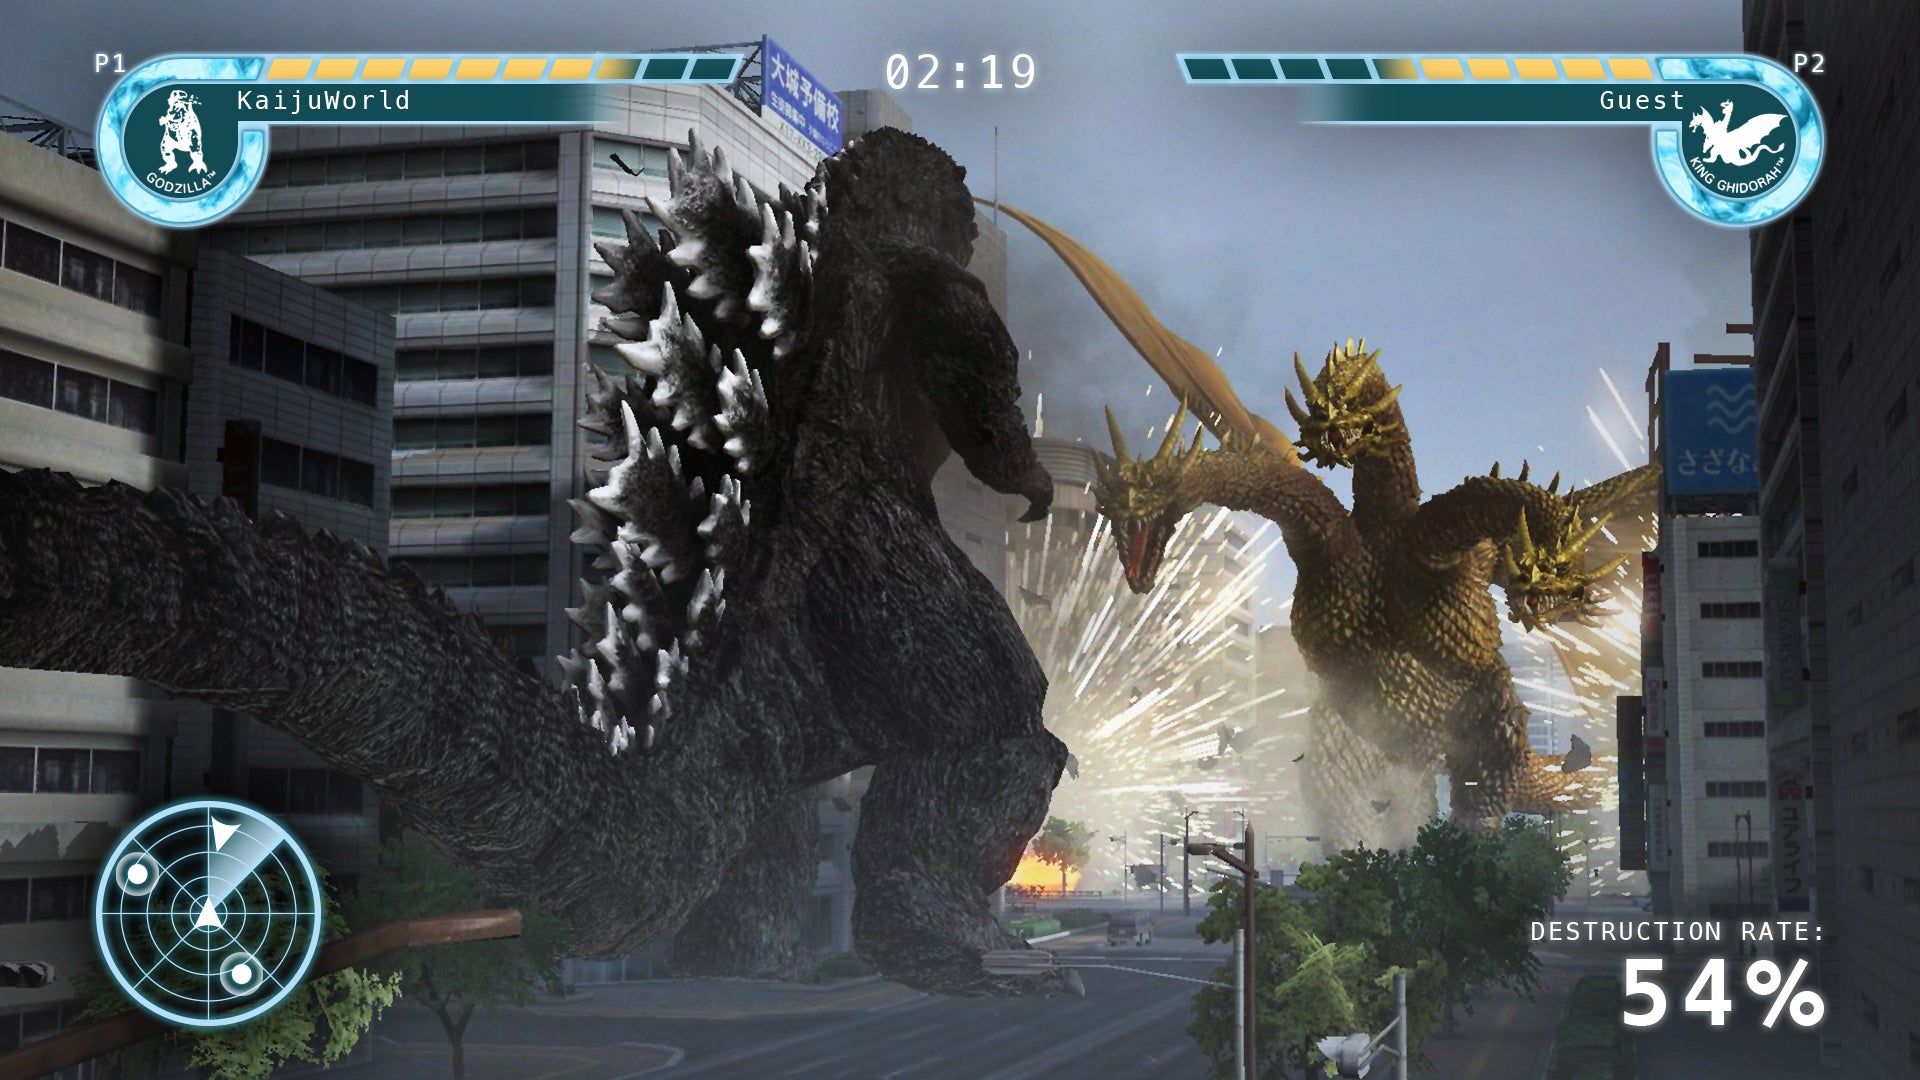 Game Godzilla Destruction